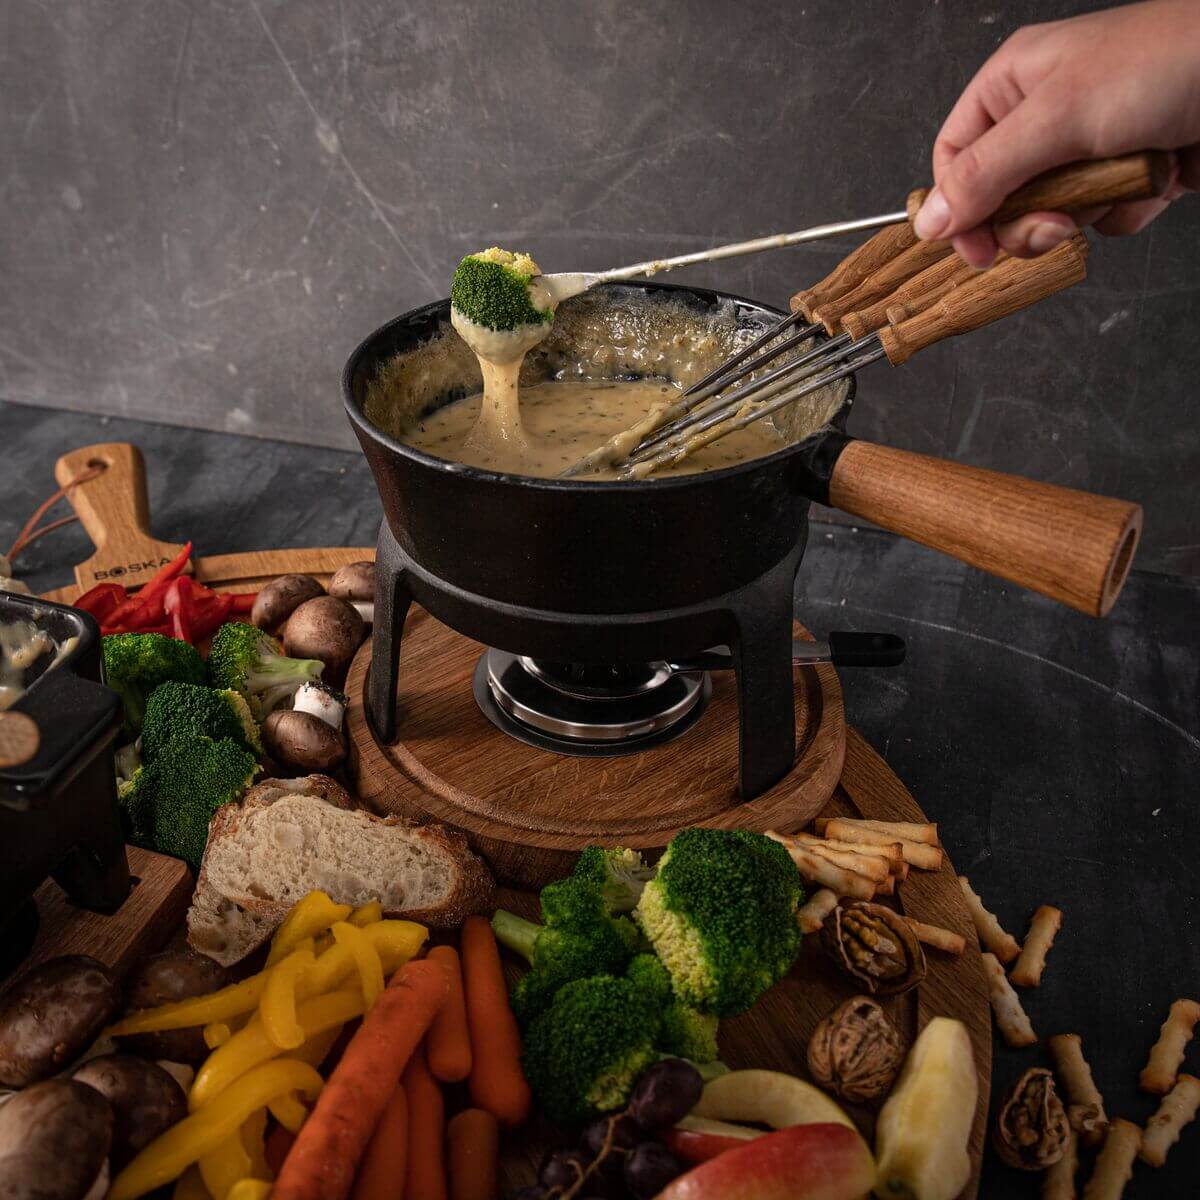 Caquelon fondue fromage poelon casserole couvercle orange Taille